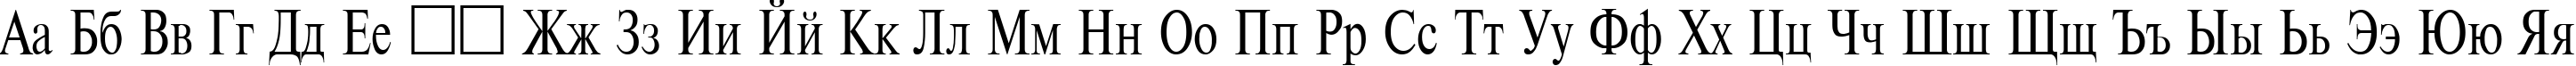 Пример написания русского алфавита шрифтом TimesET75n